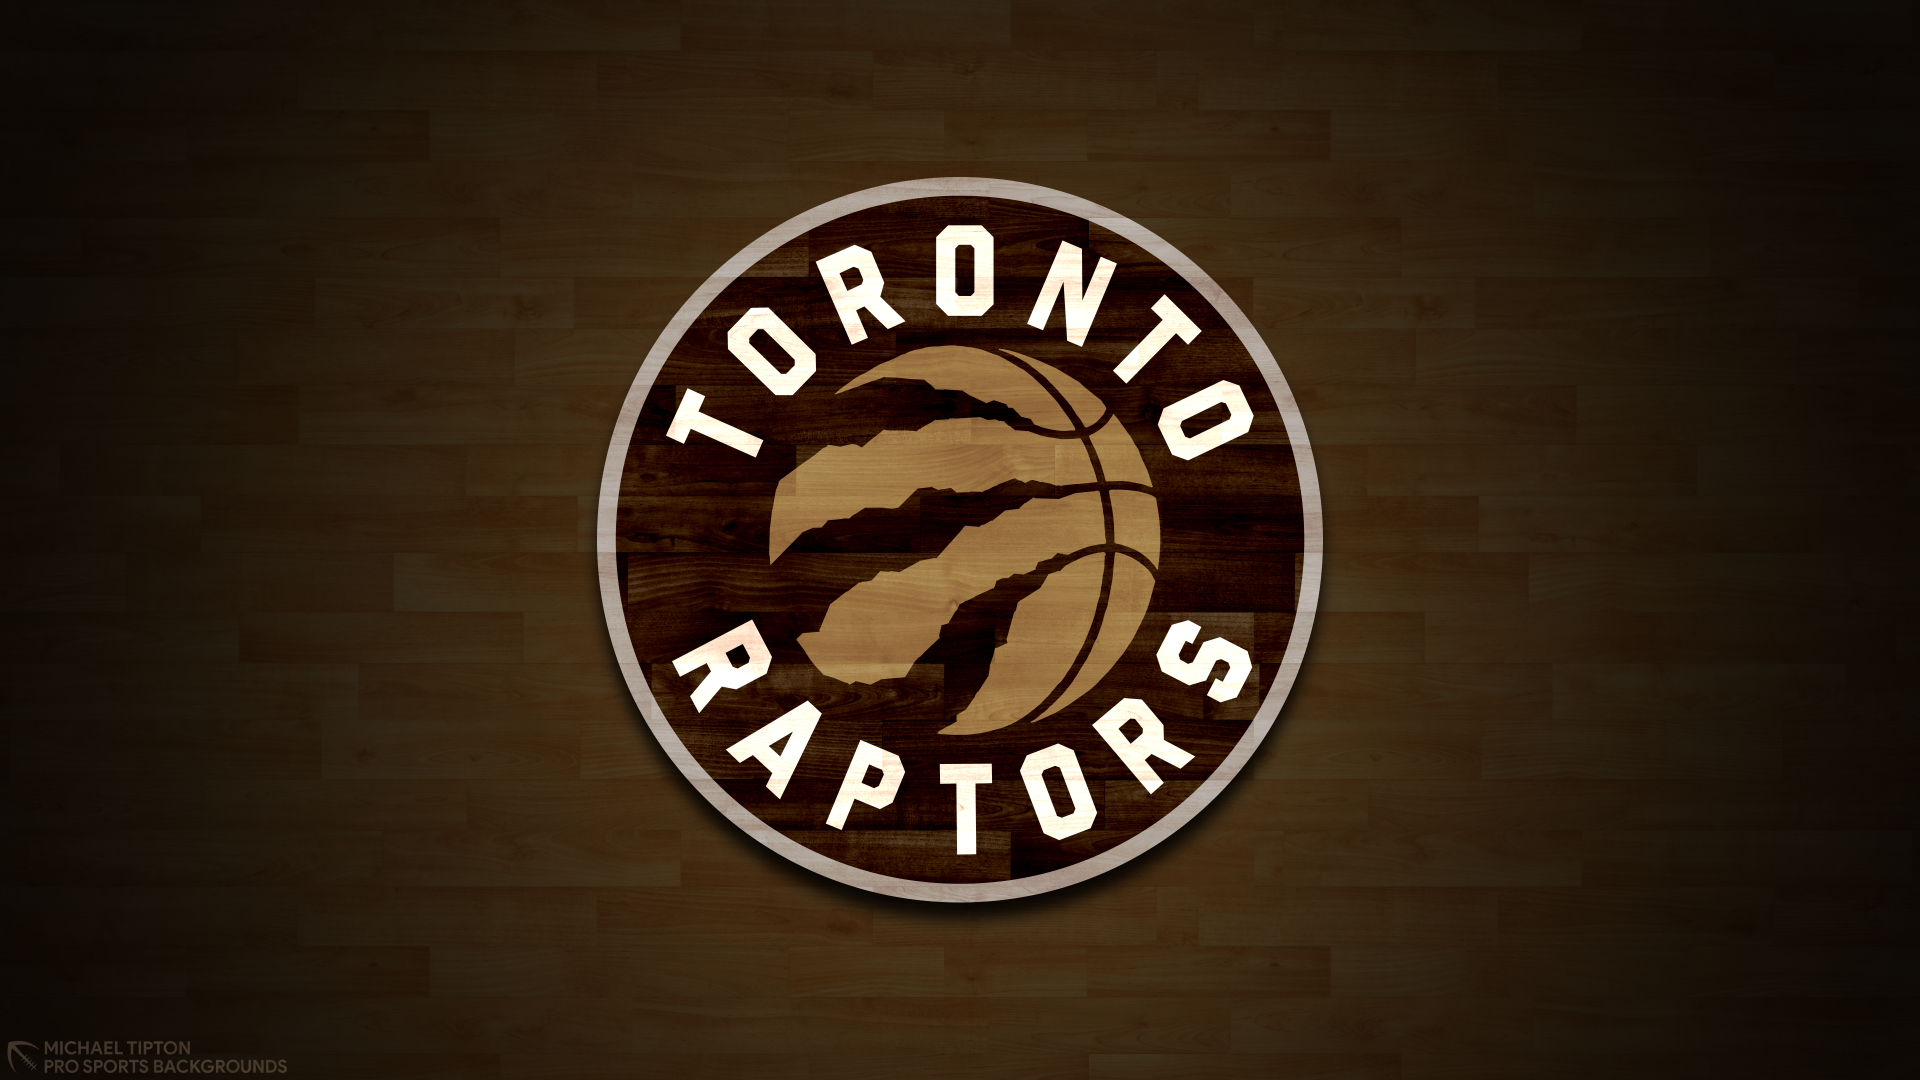 Toronto Raptors 4k Ultra HD Wallpaper  Background Image  3840x2160